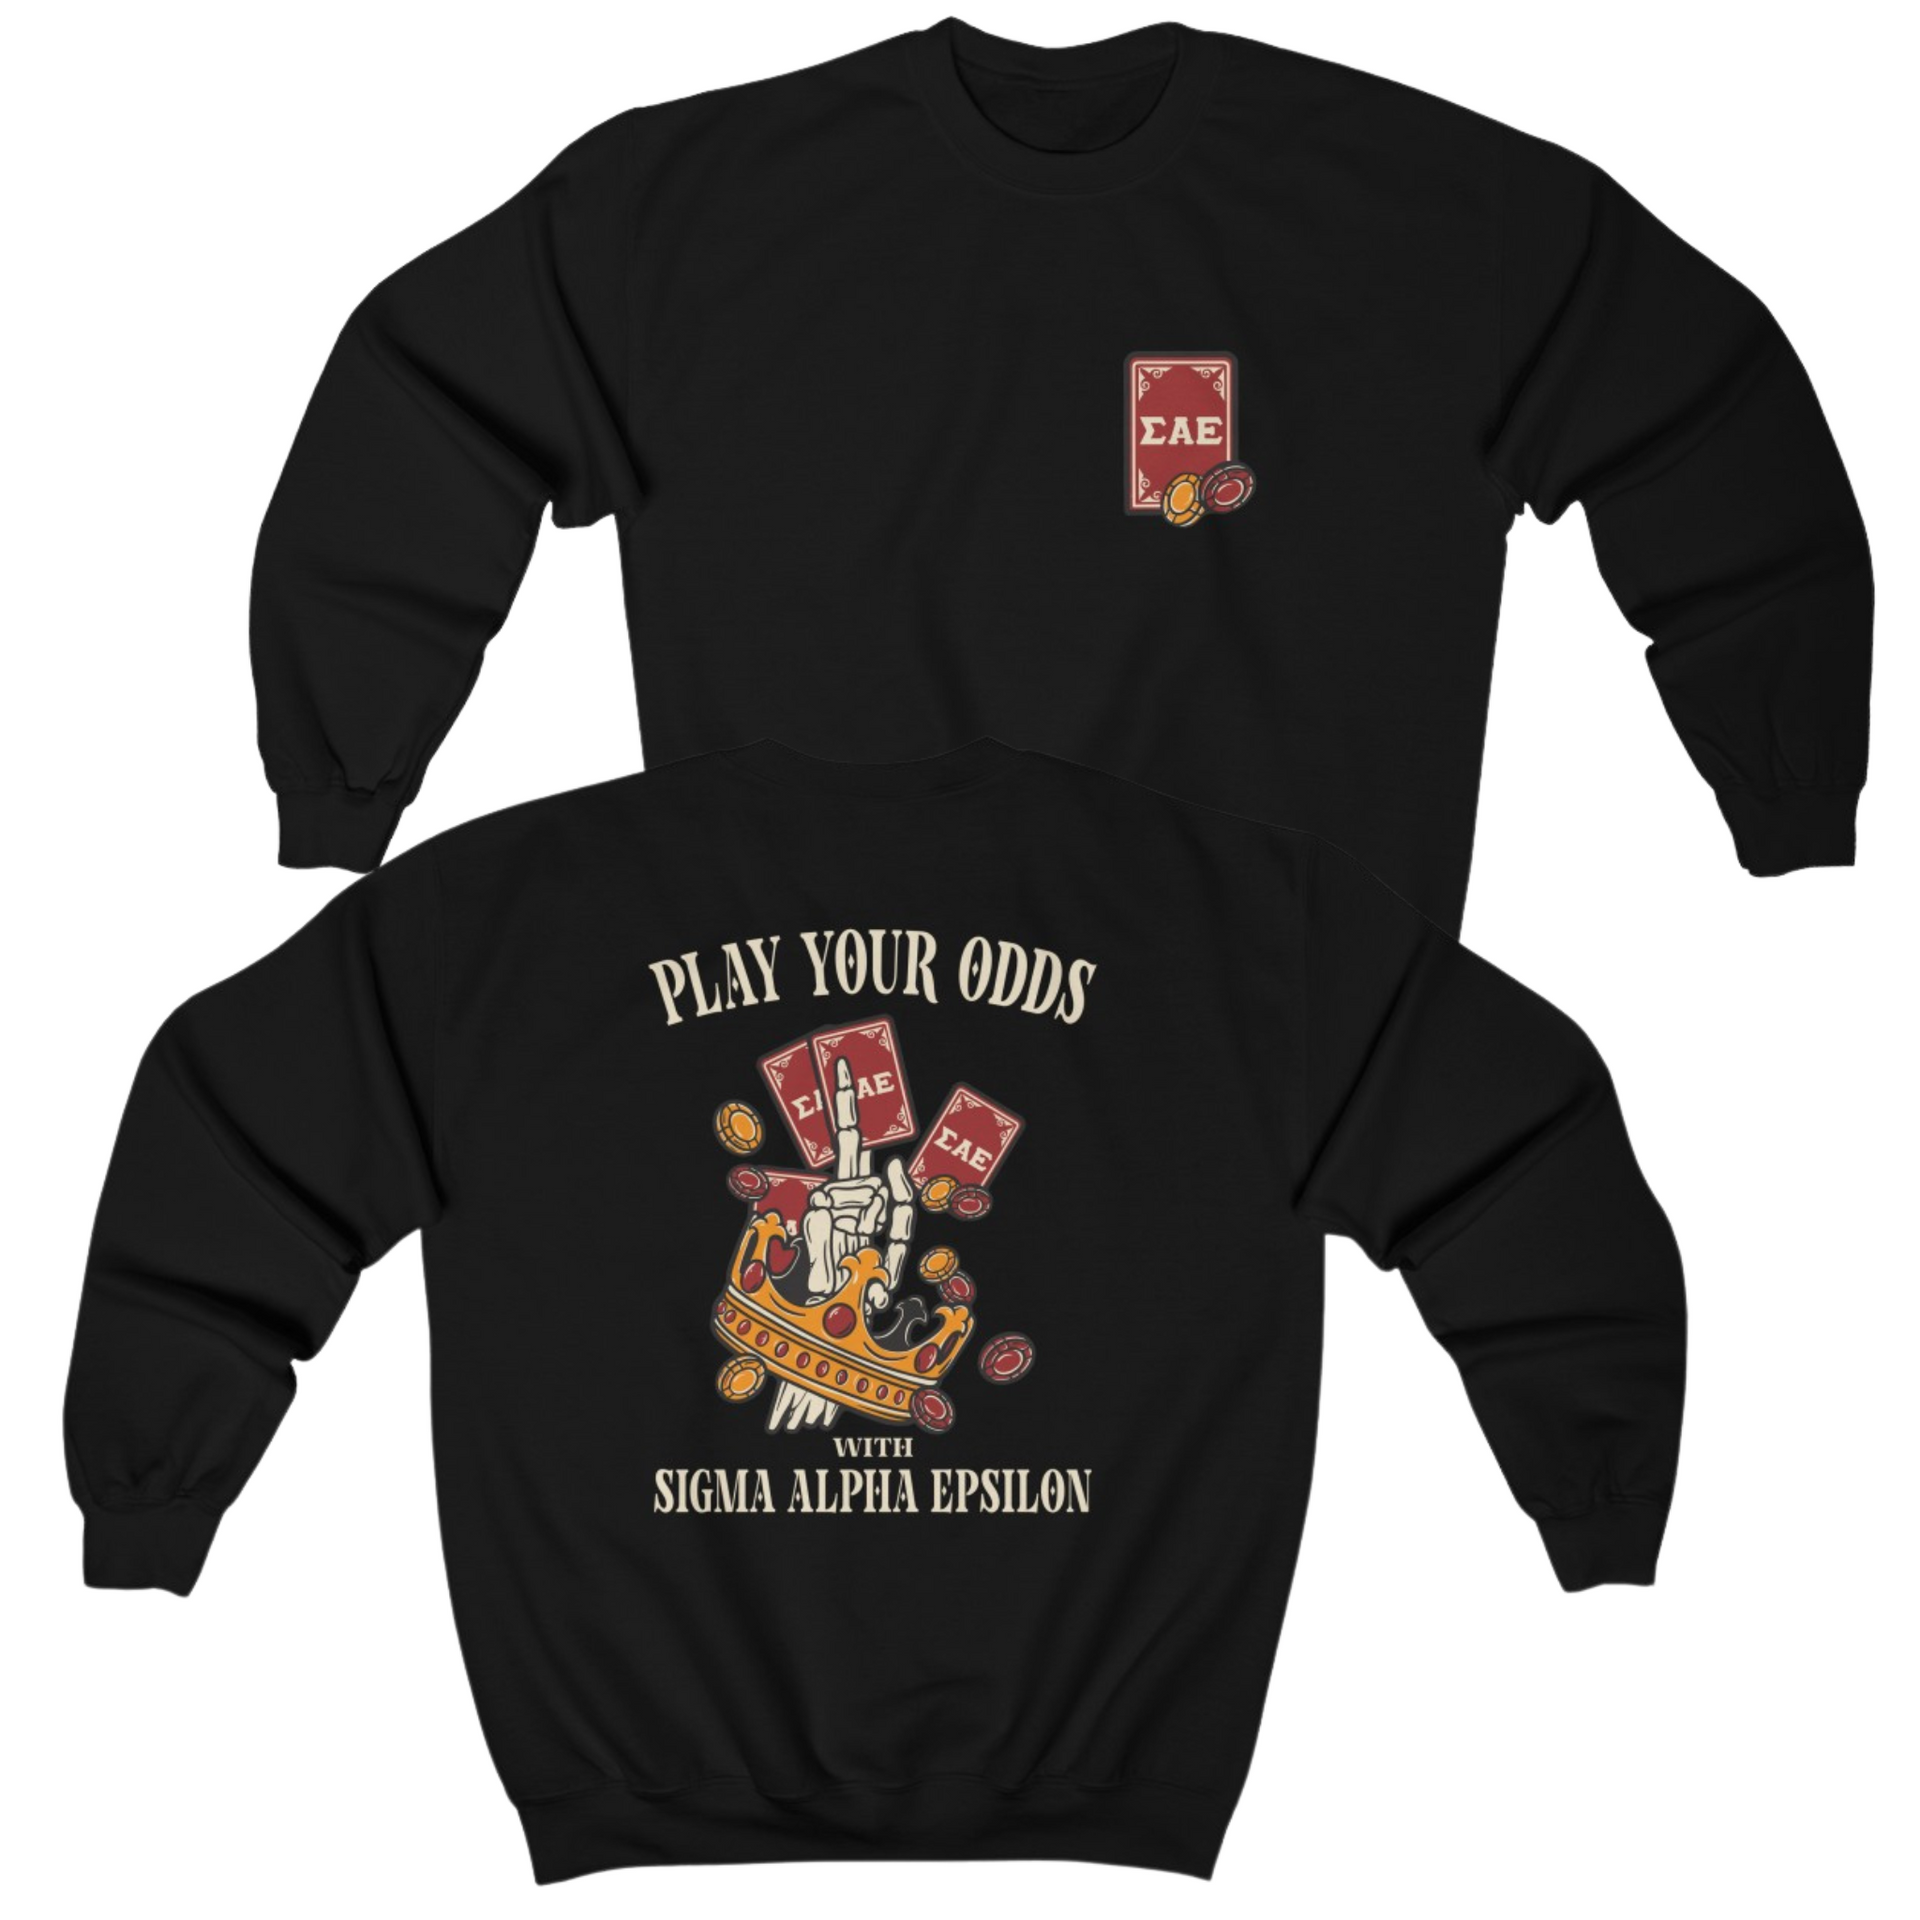 Black Sigma Alpha Epsilon Graphic Crewneck Sweatshirt | Play Your Odds | Sigma Alpha Epsilon Clothing and Merchandise